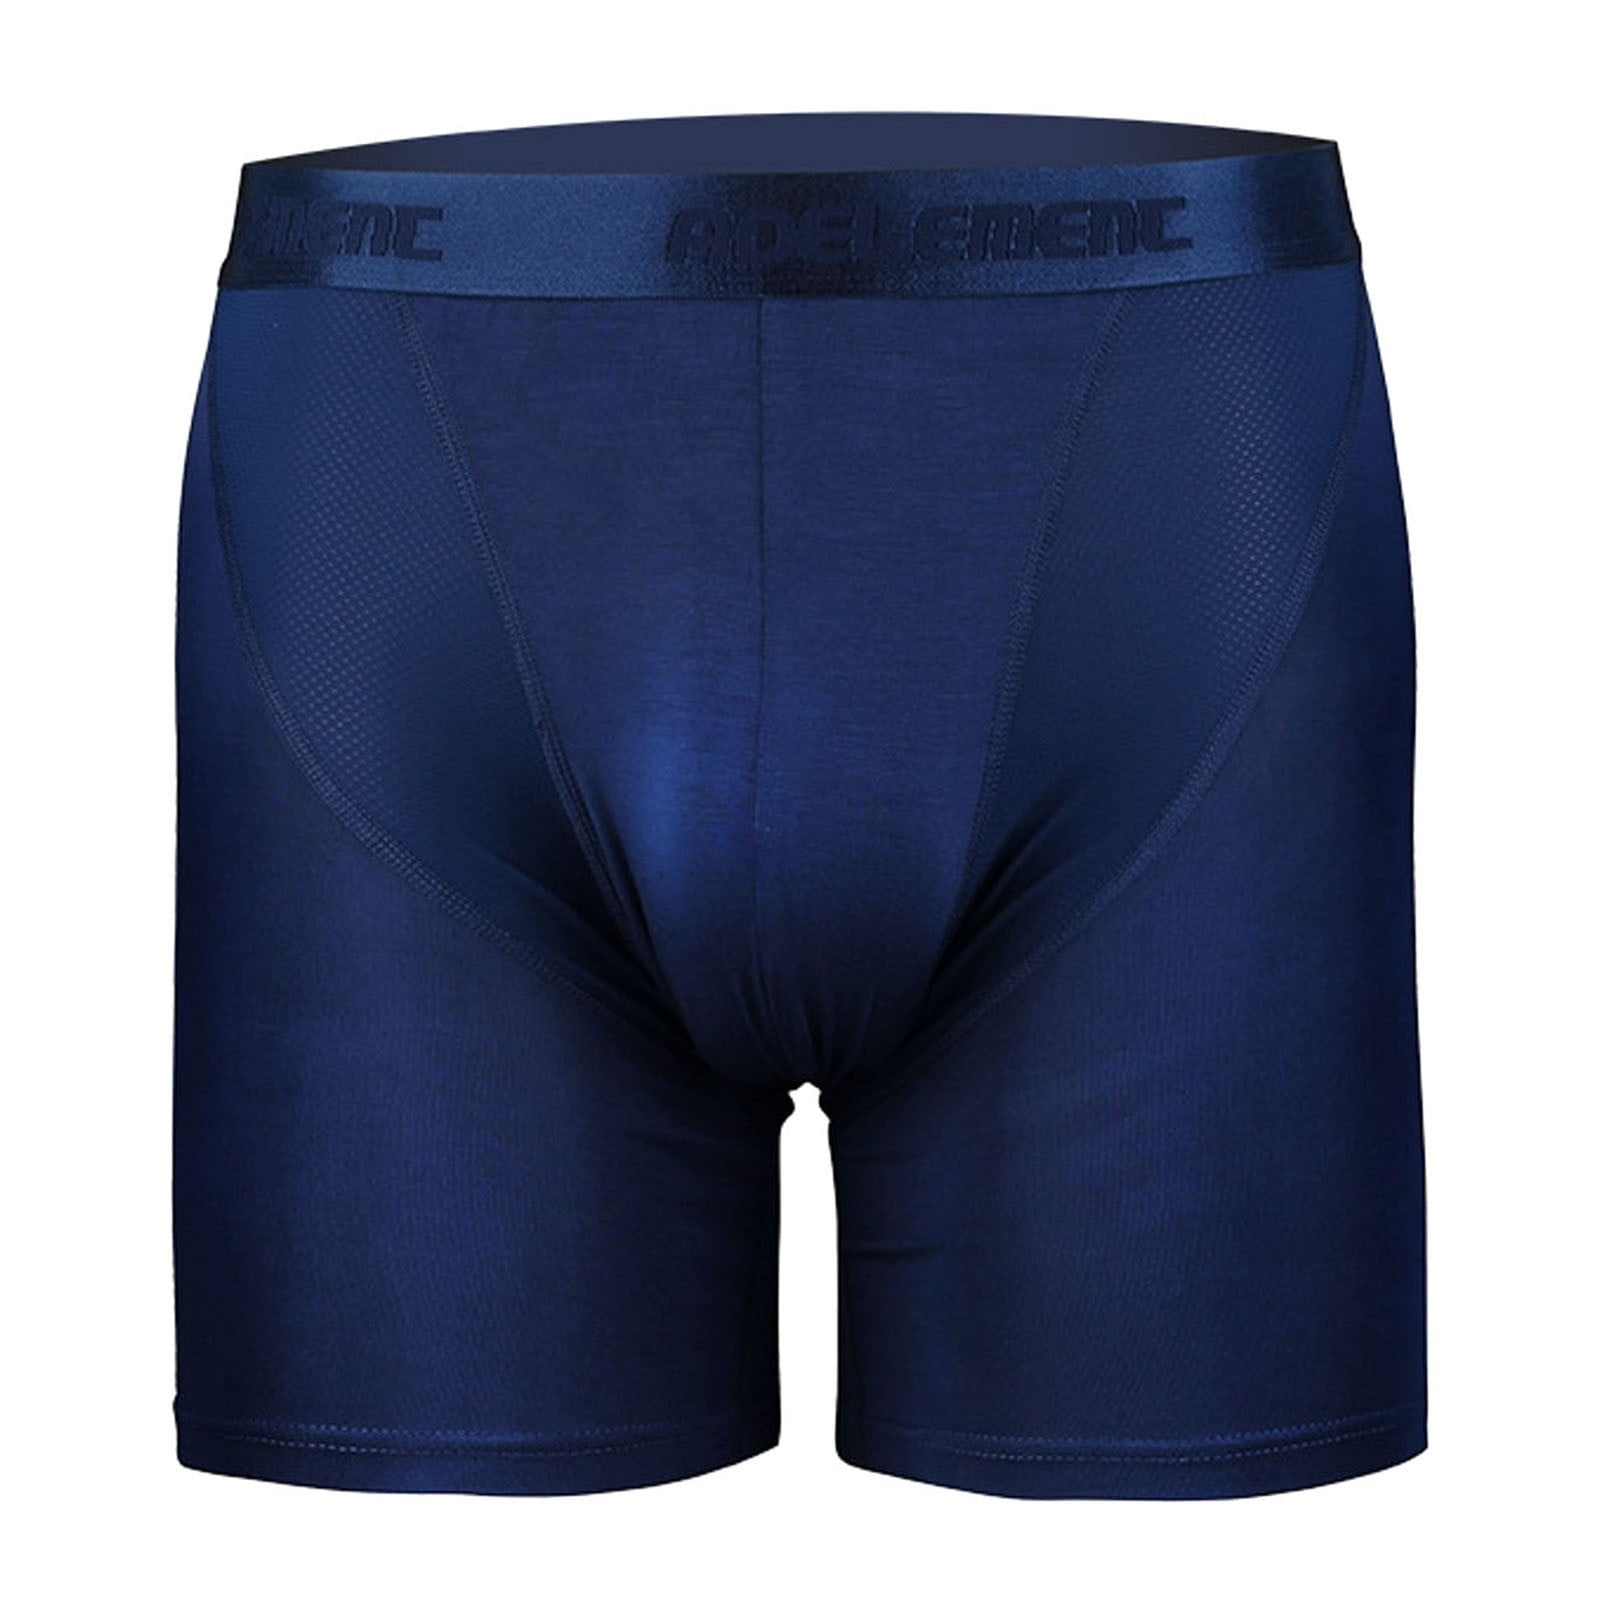 Aayomet Mens Bikini Underwear Mens Crotch Seamless Glossy Silky High ...